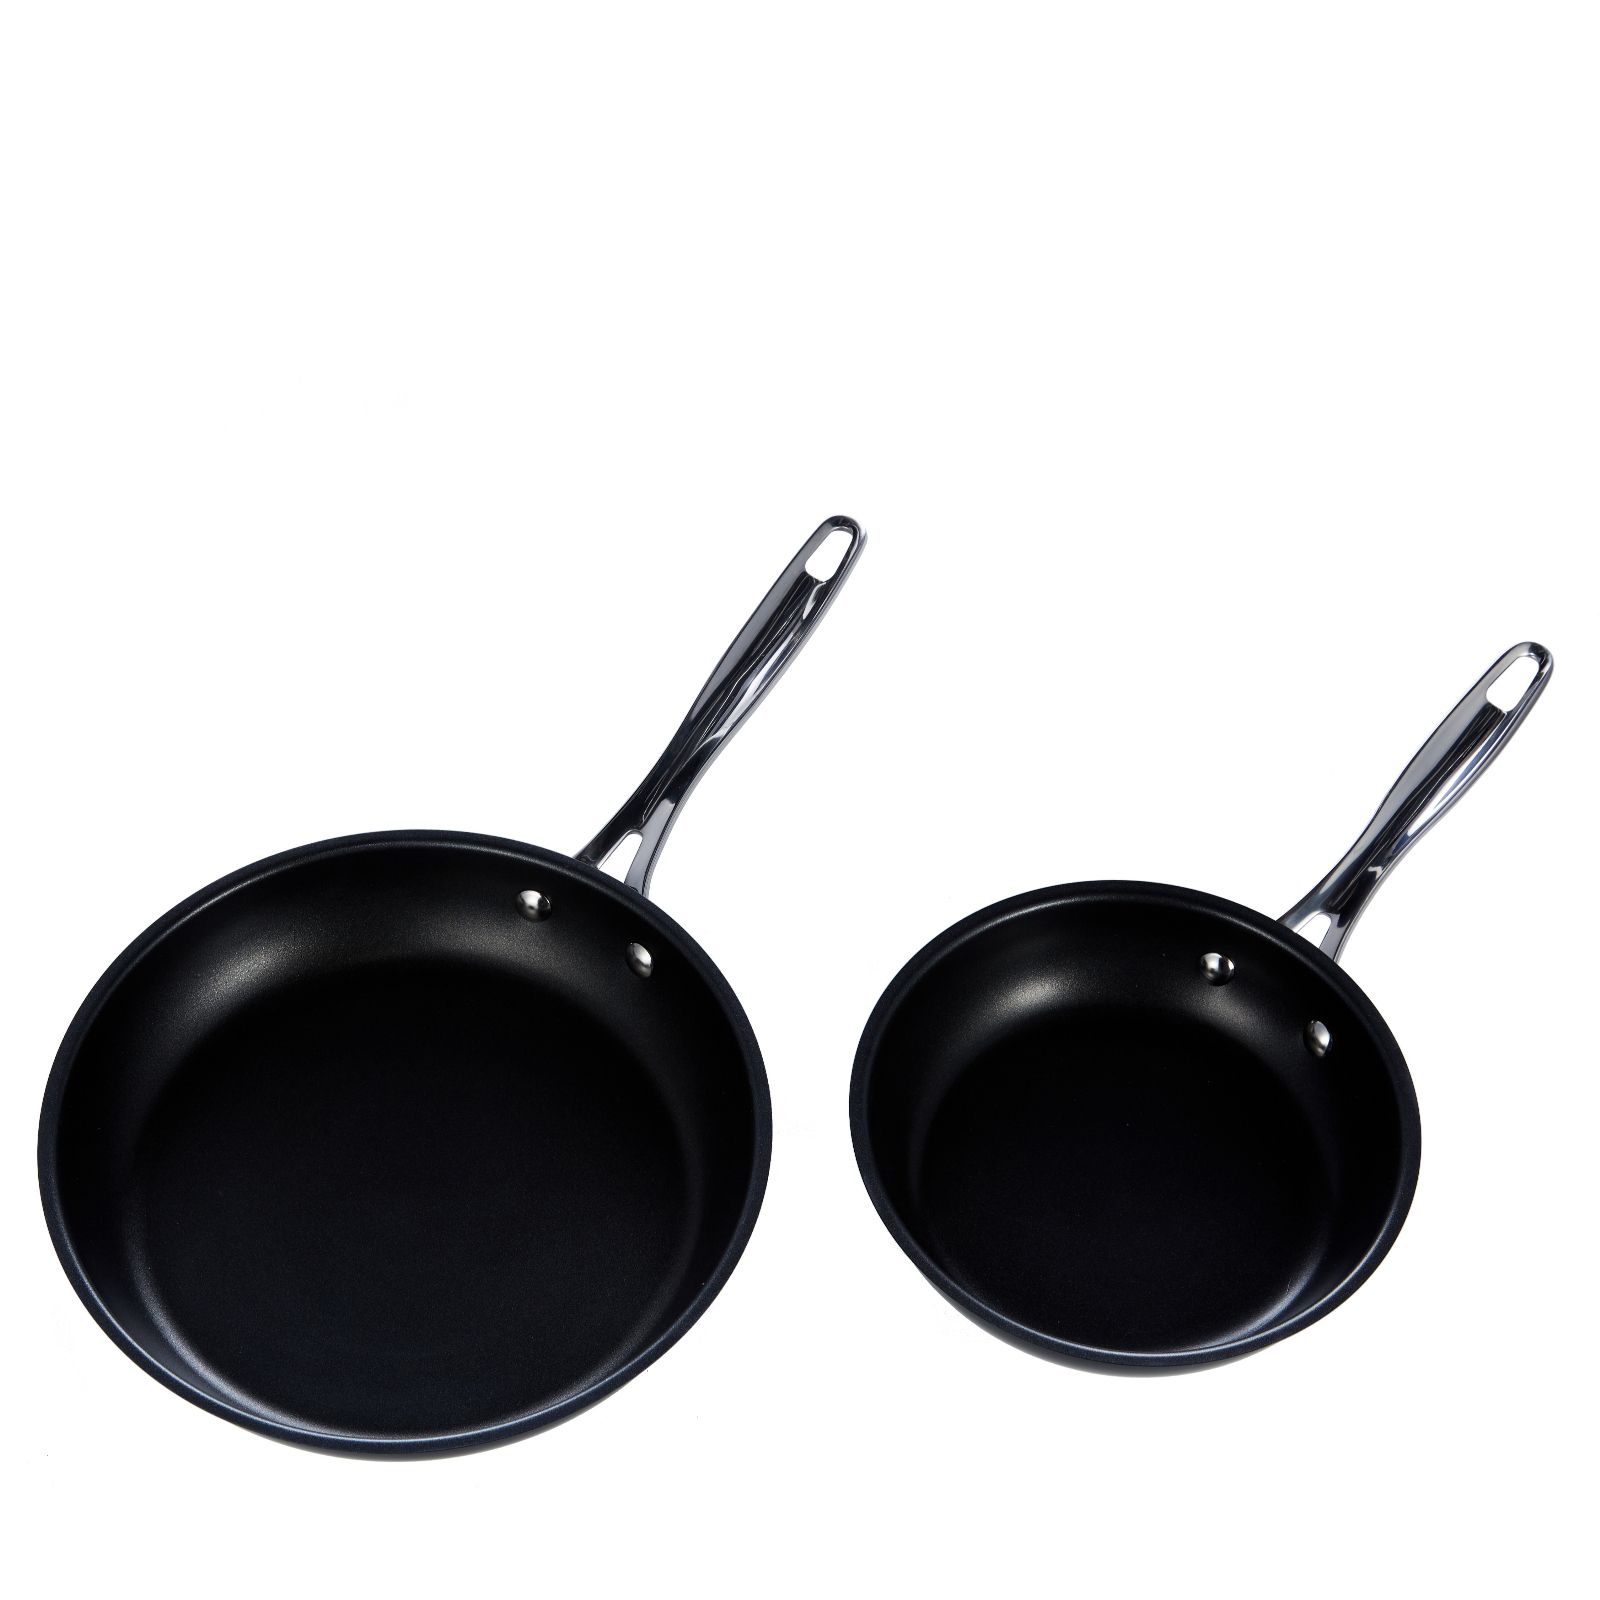 Cook's Essentials 20cm & 26cm Stainless Steel Non-Stick Frying Pan Set Cook's Essentials Stainless Steel Nonstick Cookware